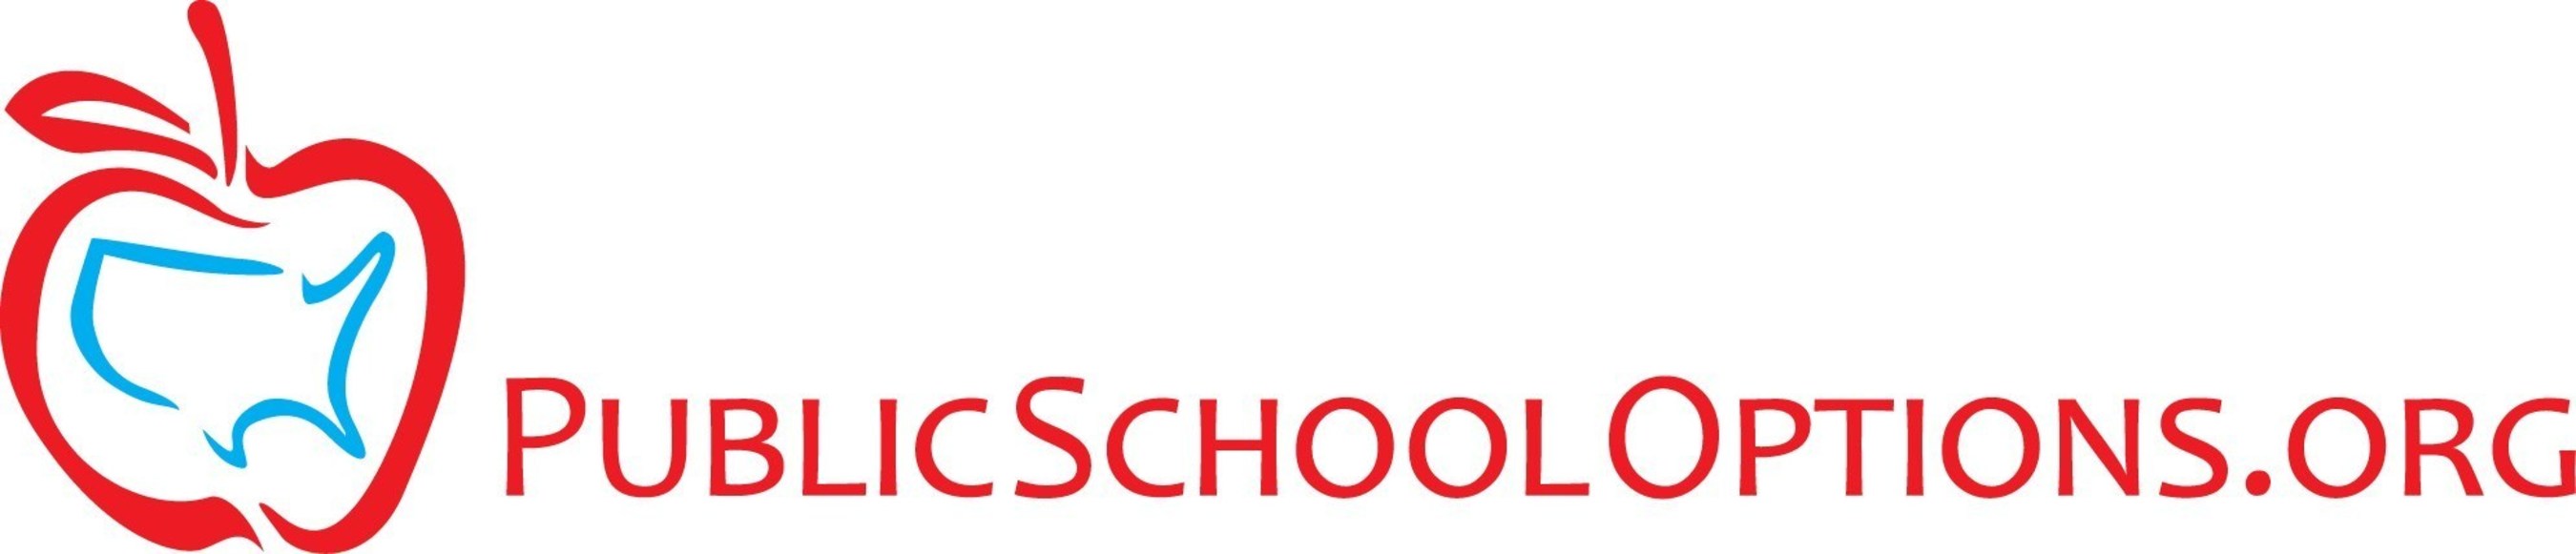 PublicSchoolOptions.org Logo